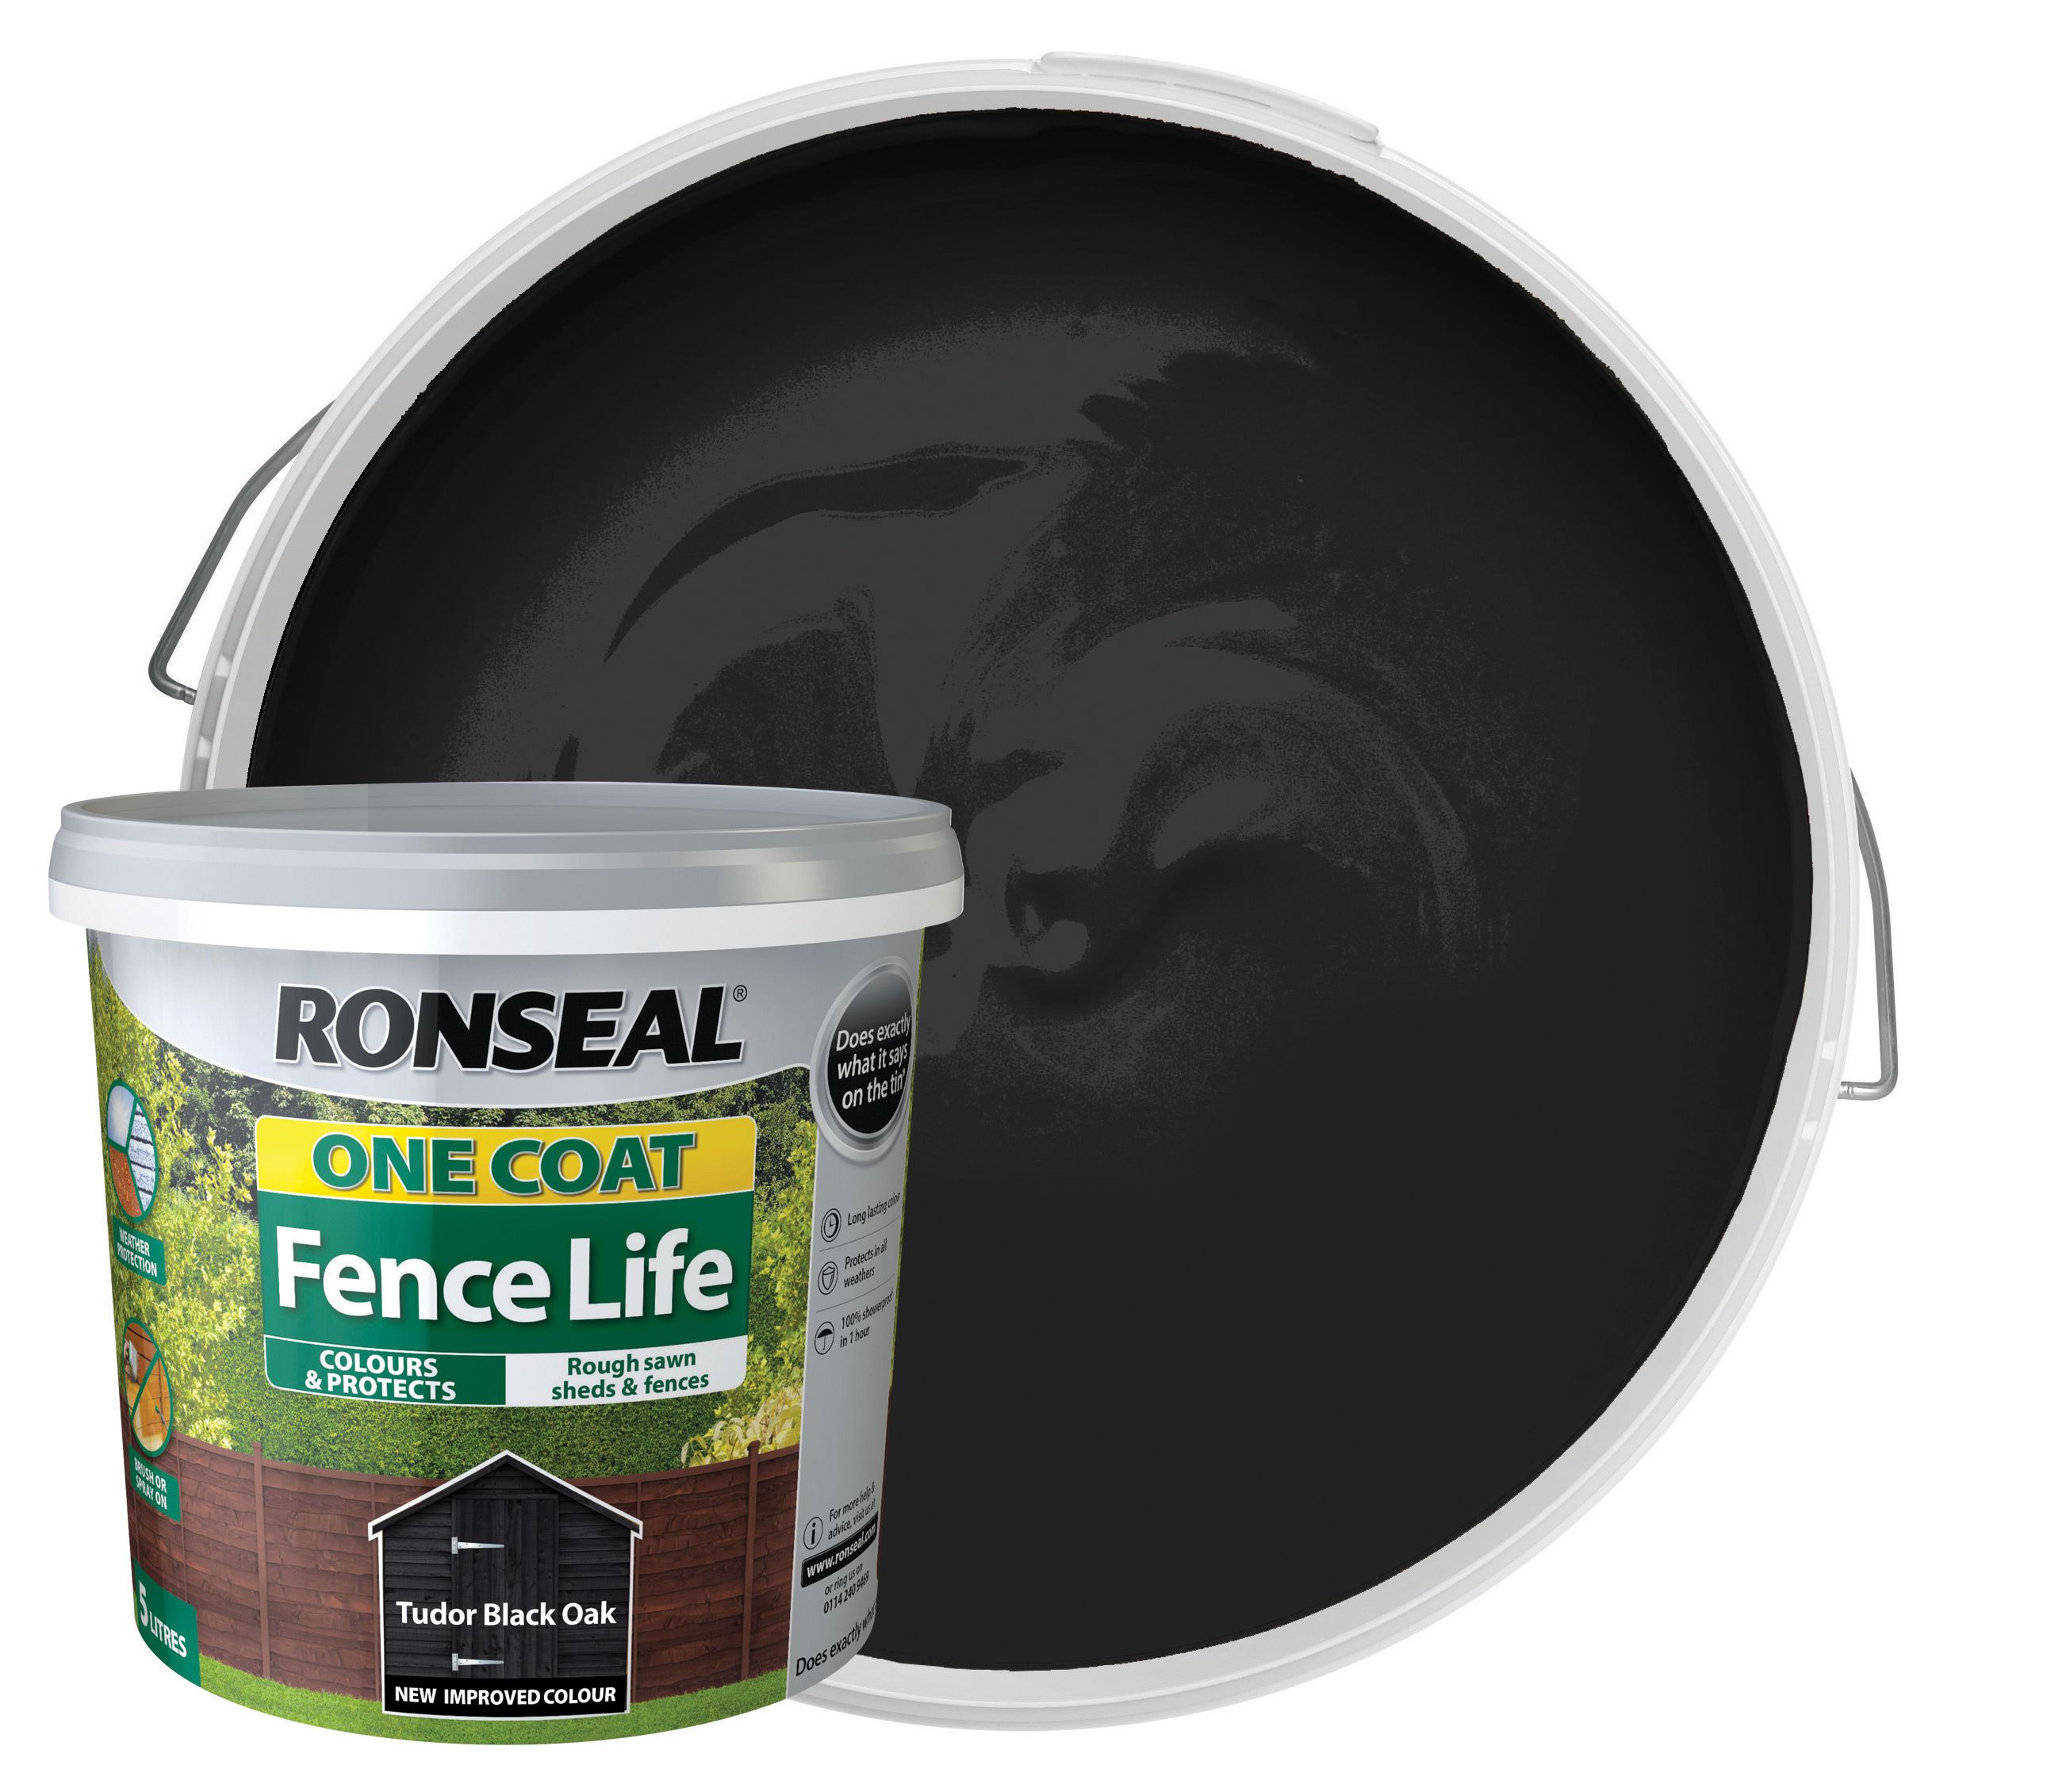 Ronseal One Coat Fence Life Matt Shed & Fence Treatment - Tudor Black Oak - 5L